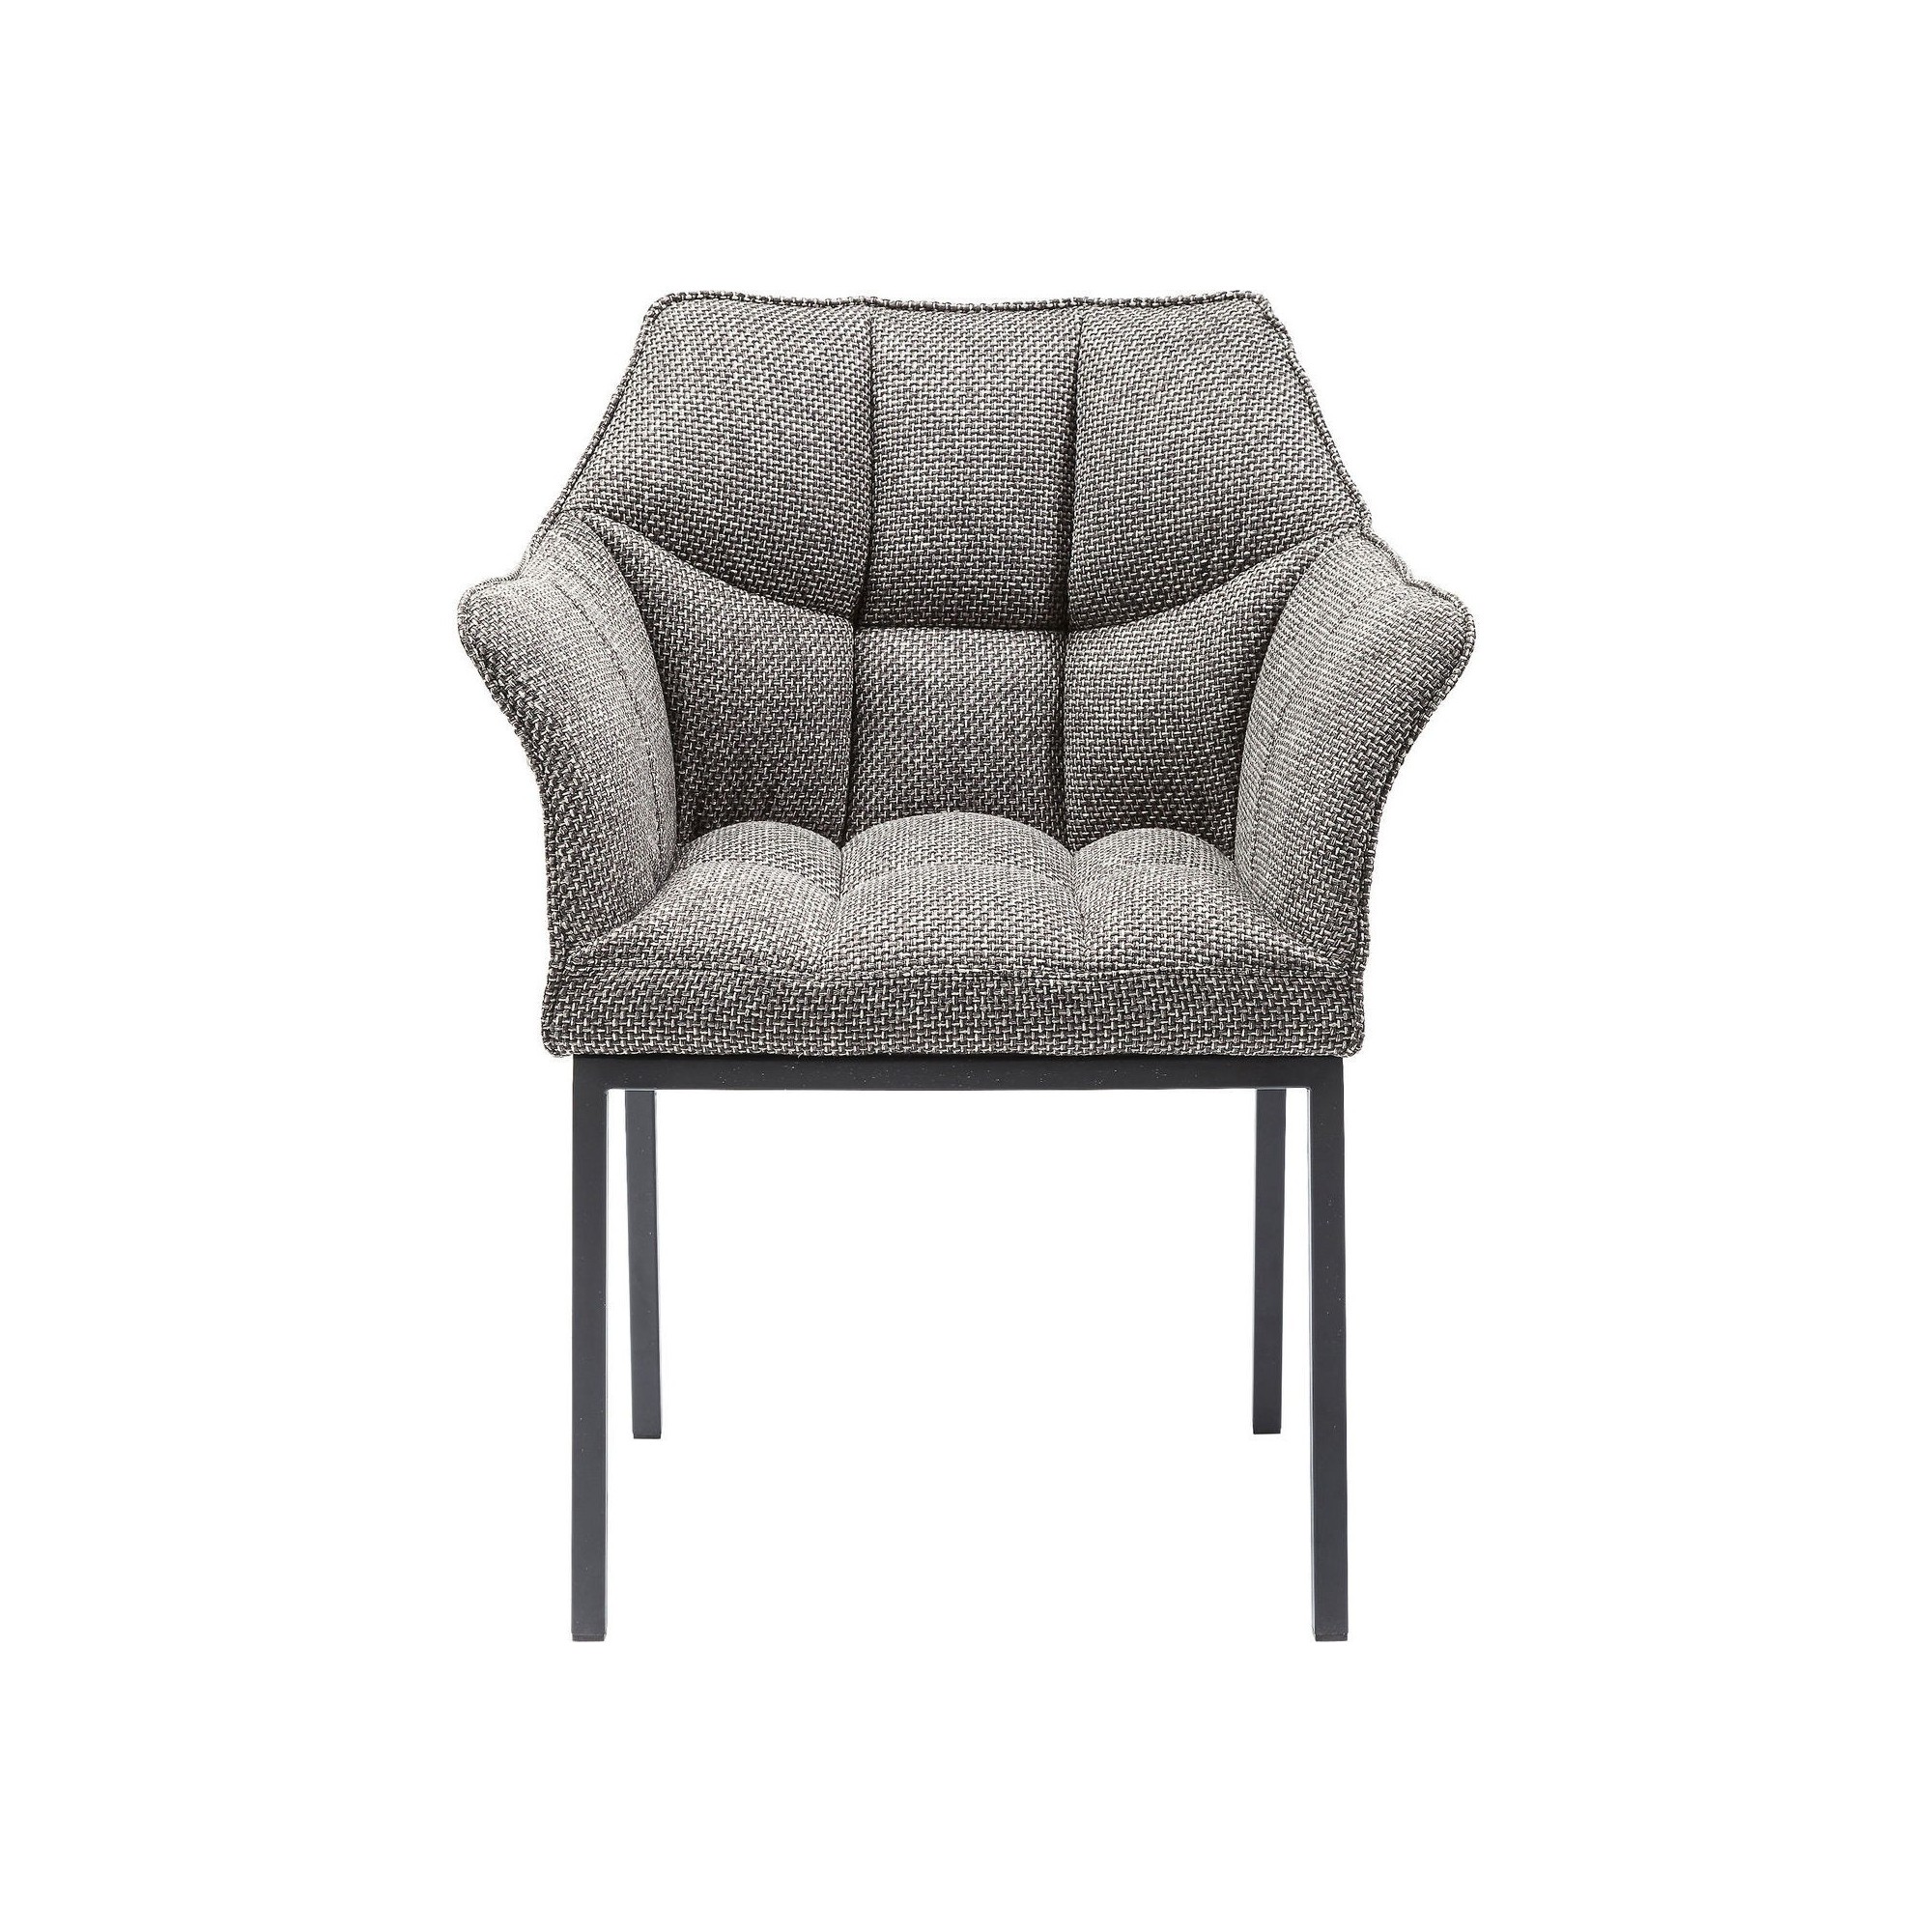 Chair with Armrest Thinktank Kare Design